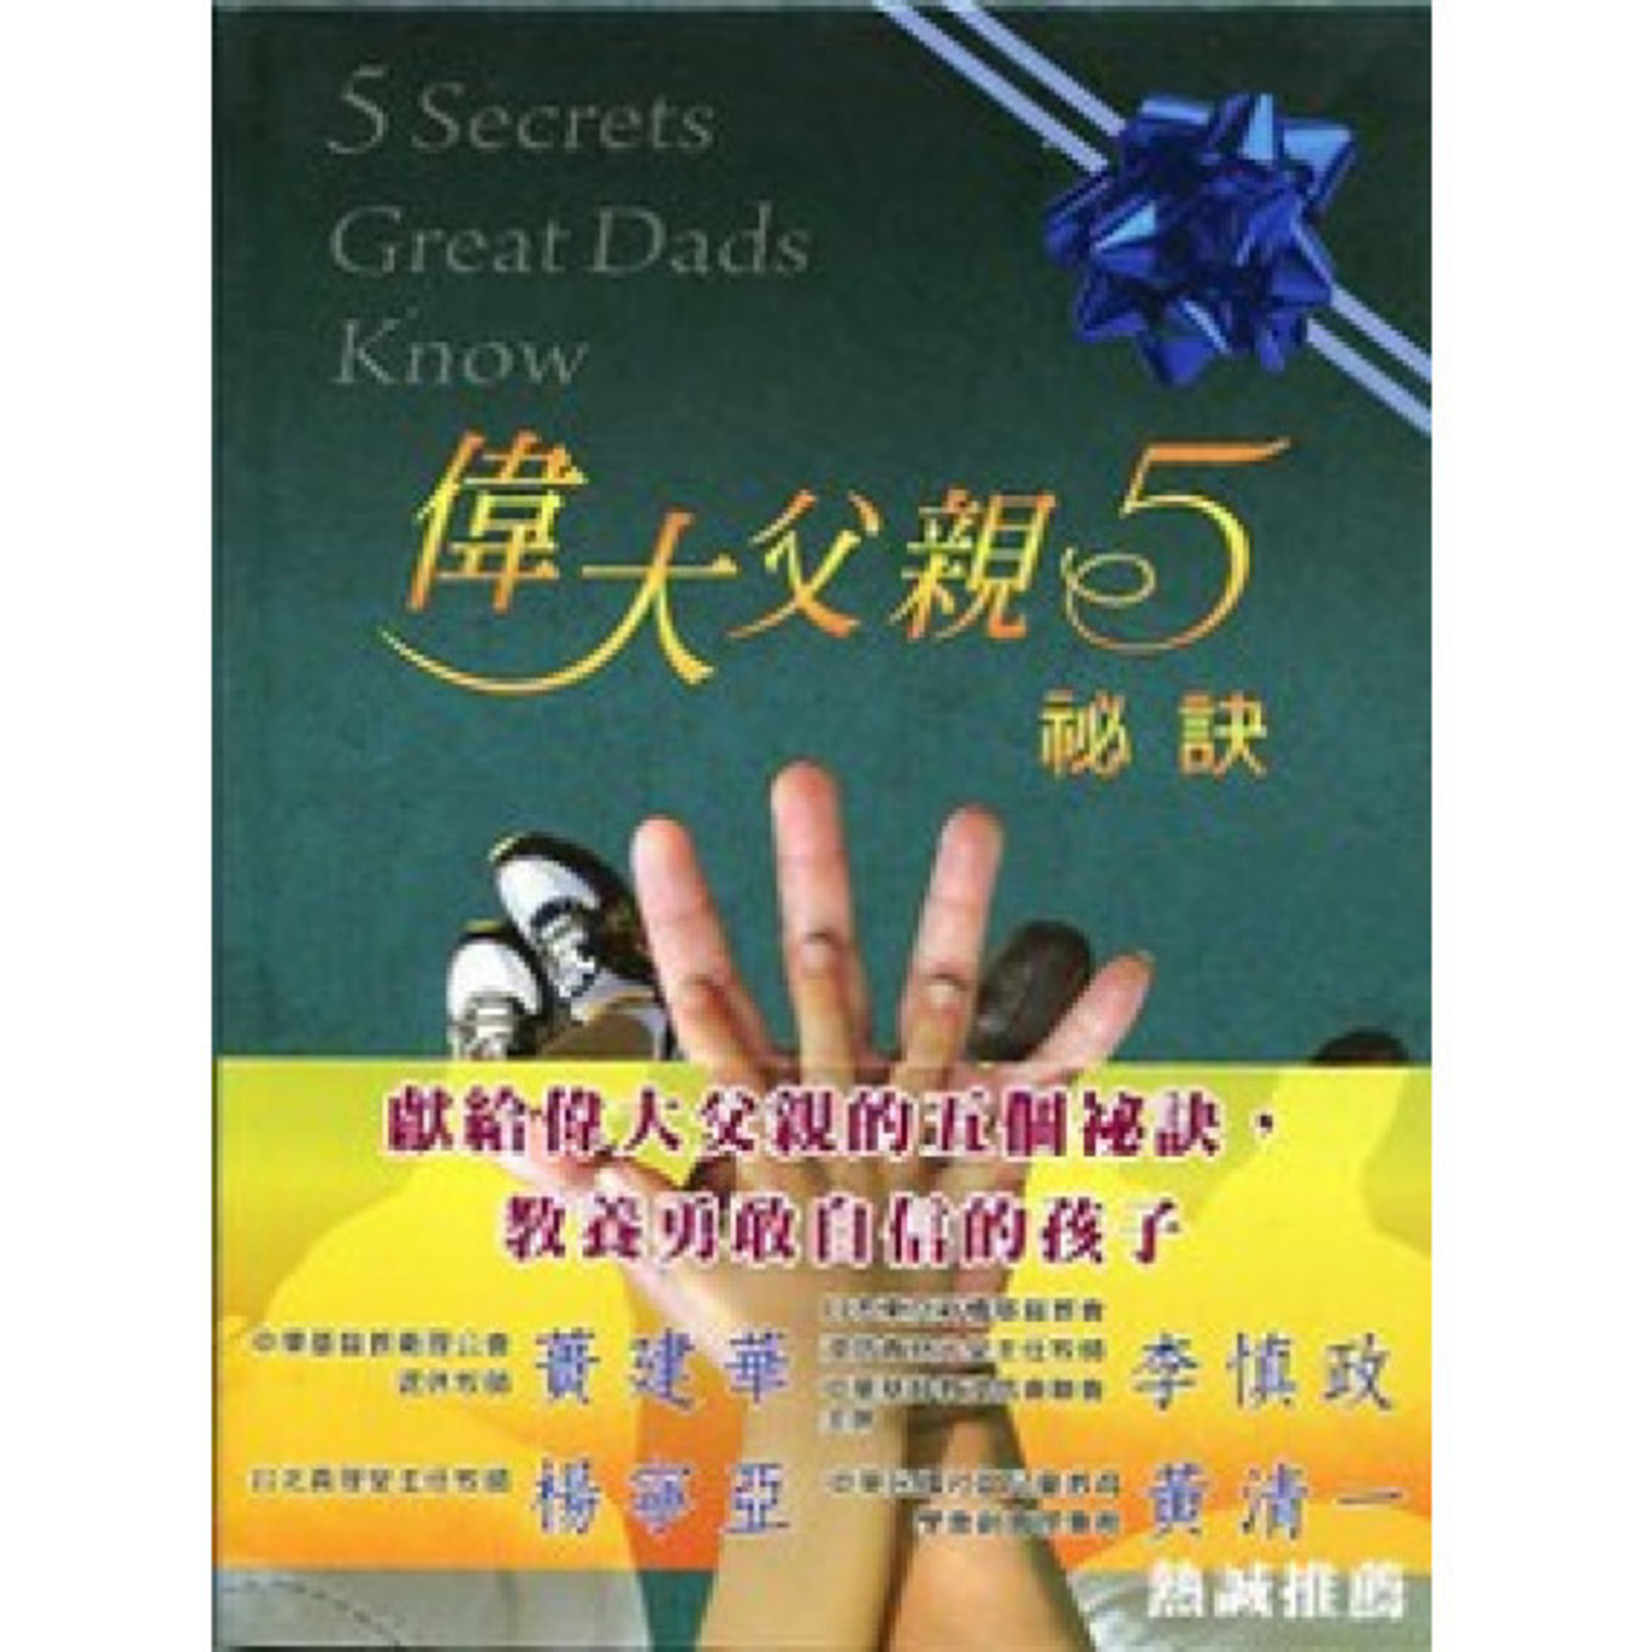 中國主日學協會 China Sunday School Association 偉大父親5祕訣 | 5 Secrets Great Dads know